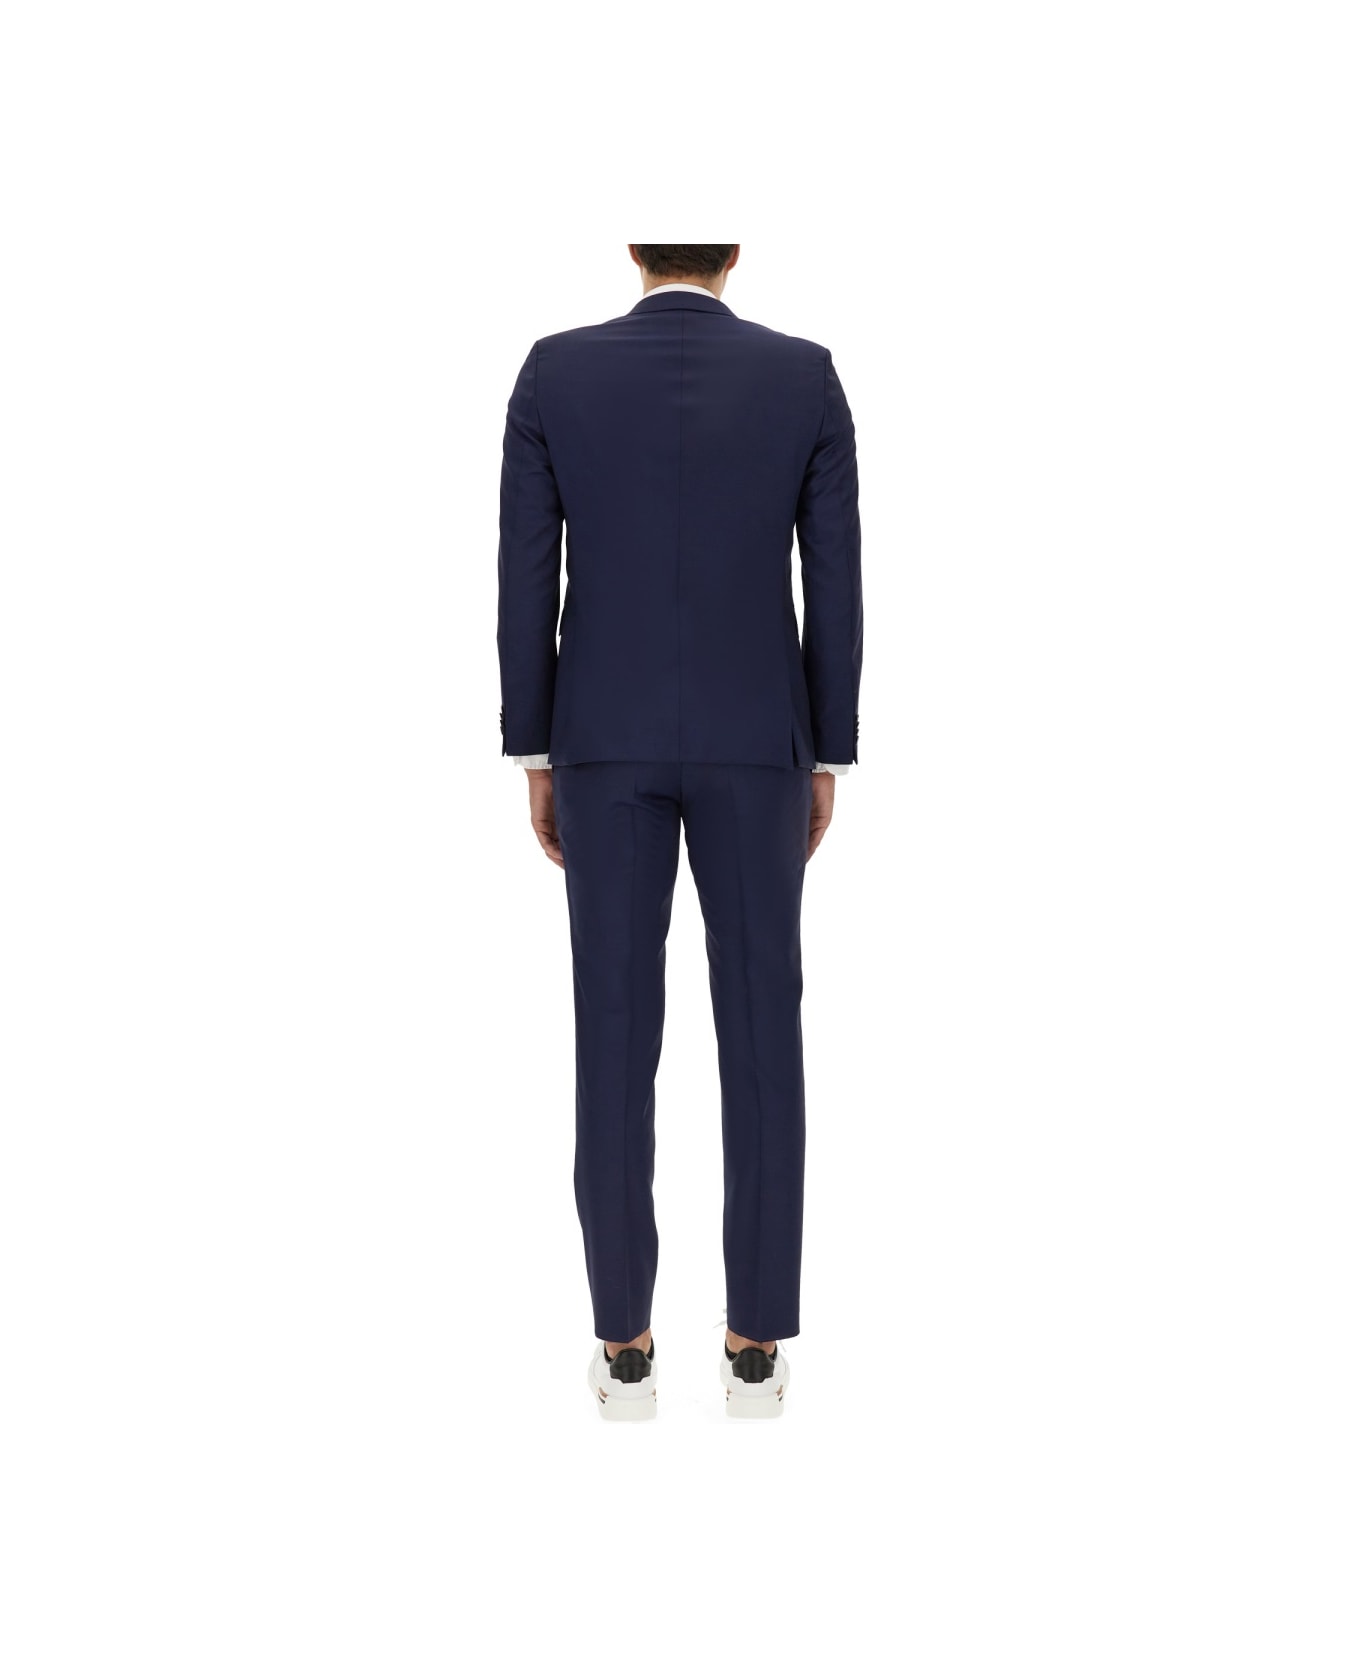 Hugo Boss H-reymond Suit - BLUE